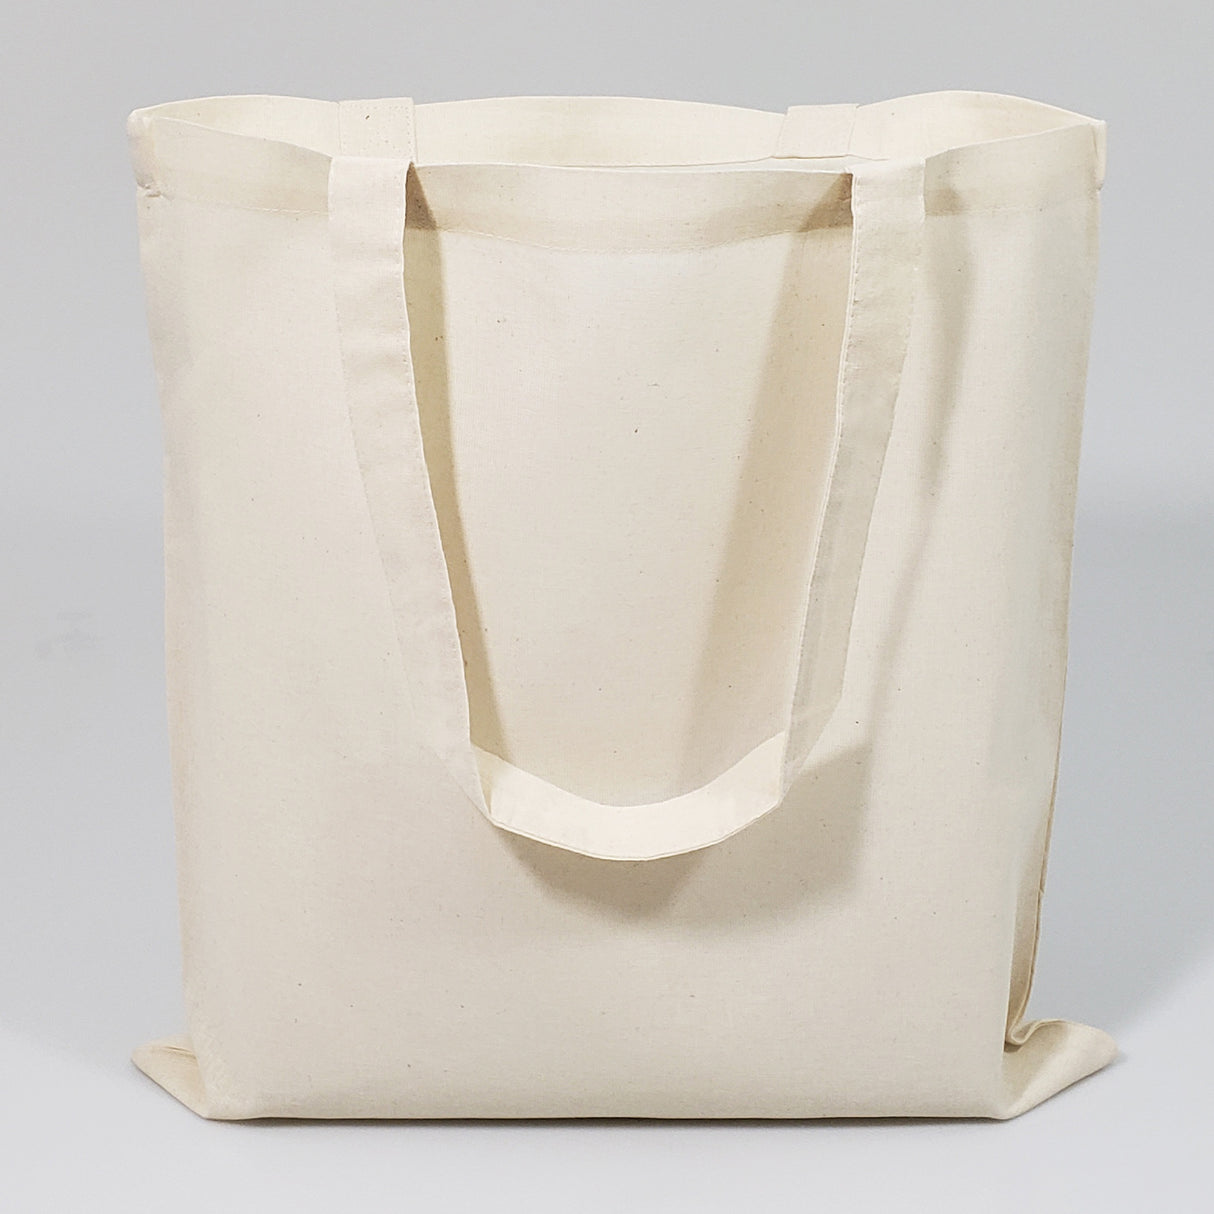 Tishwish Custom 100% Organic Cotton Bags